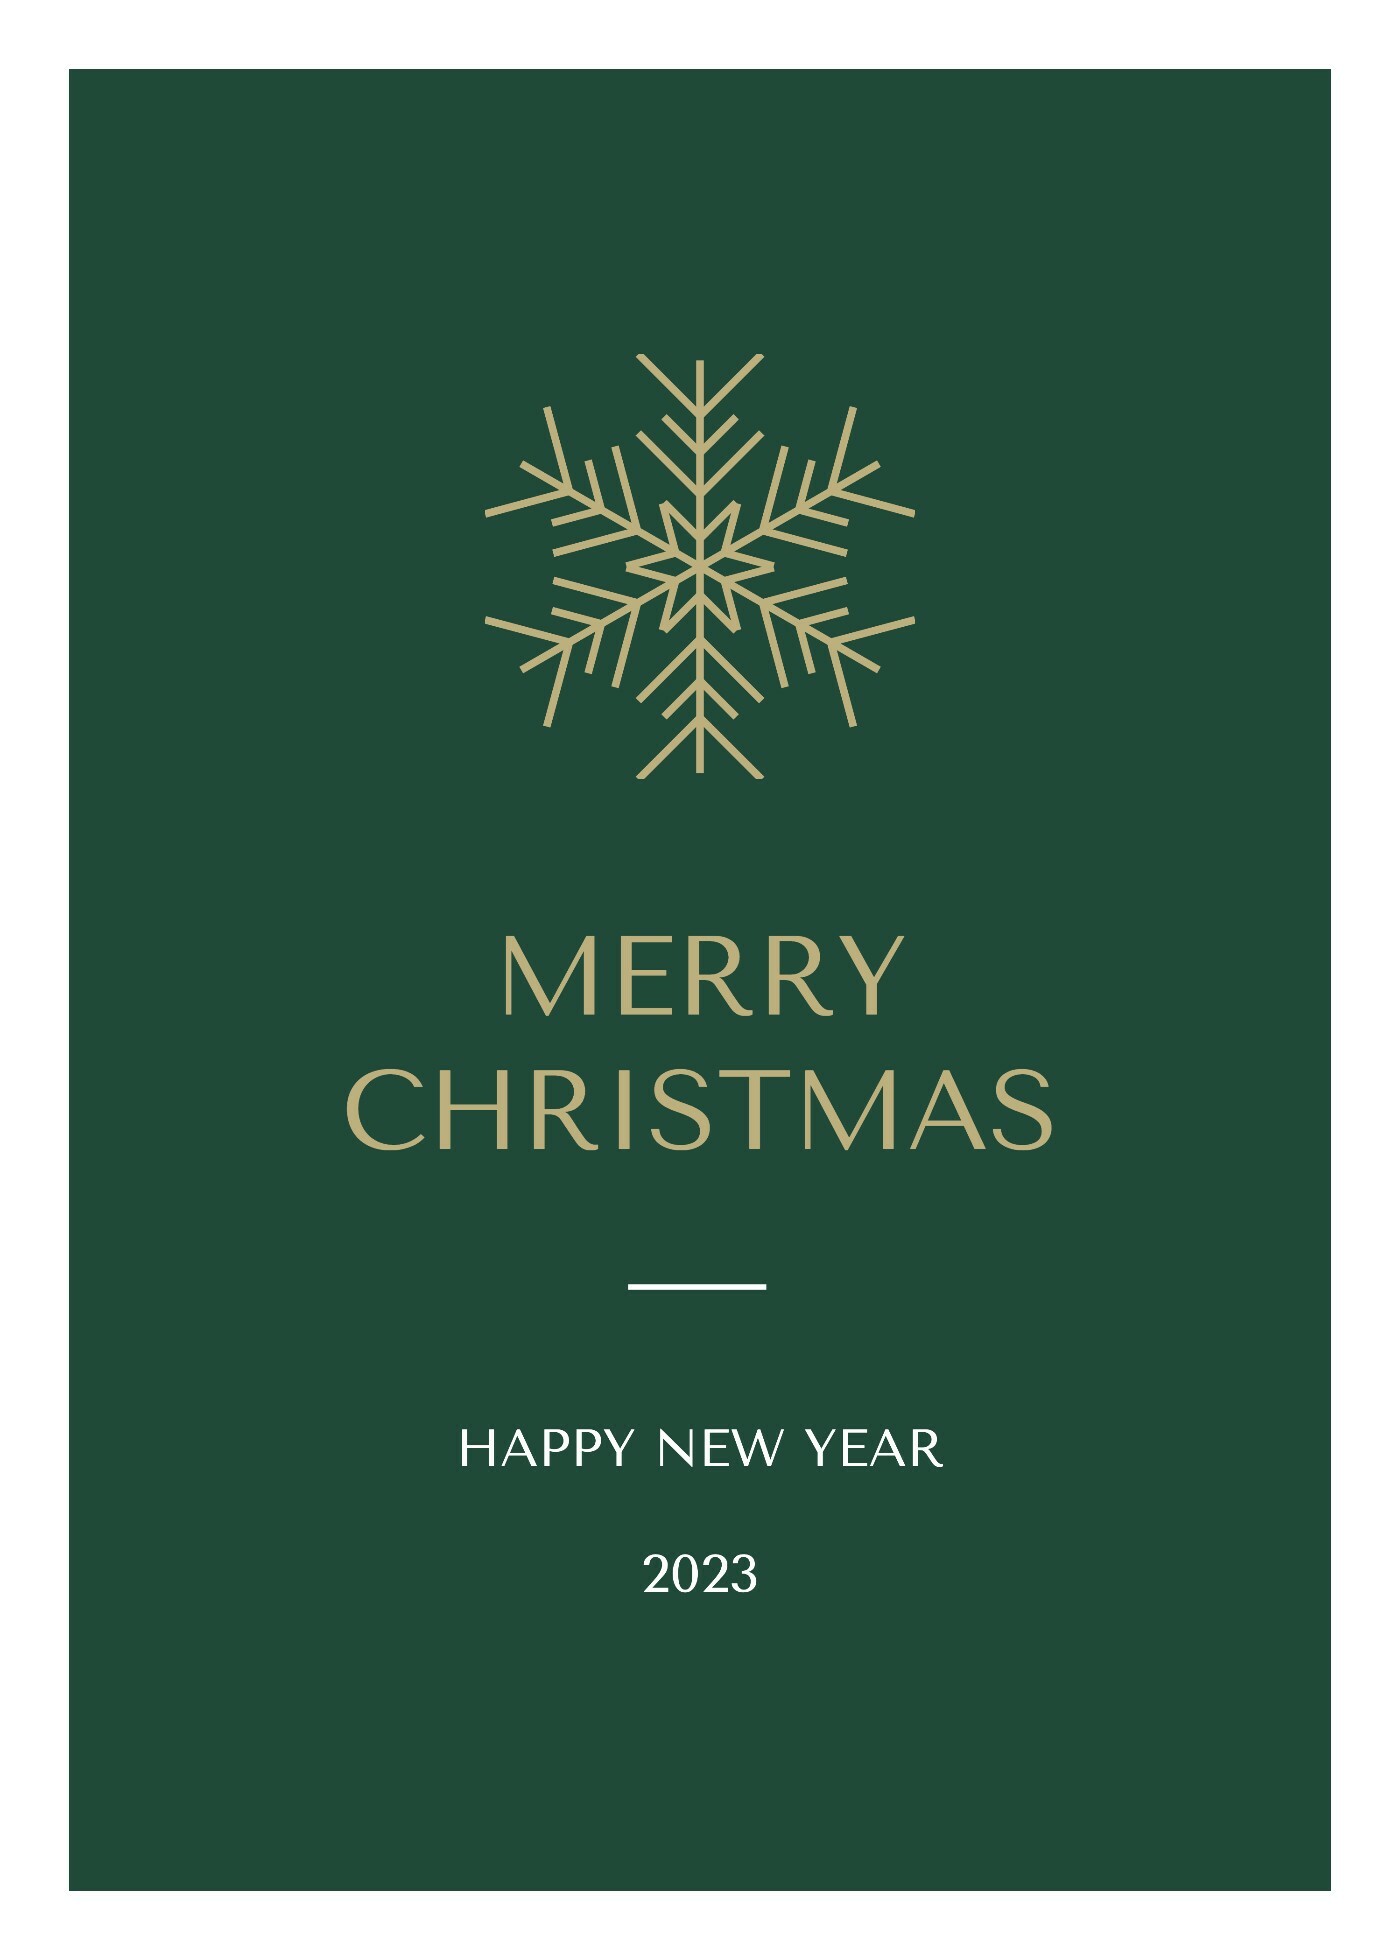 Christmas Greeting Card template